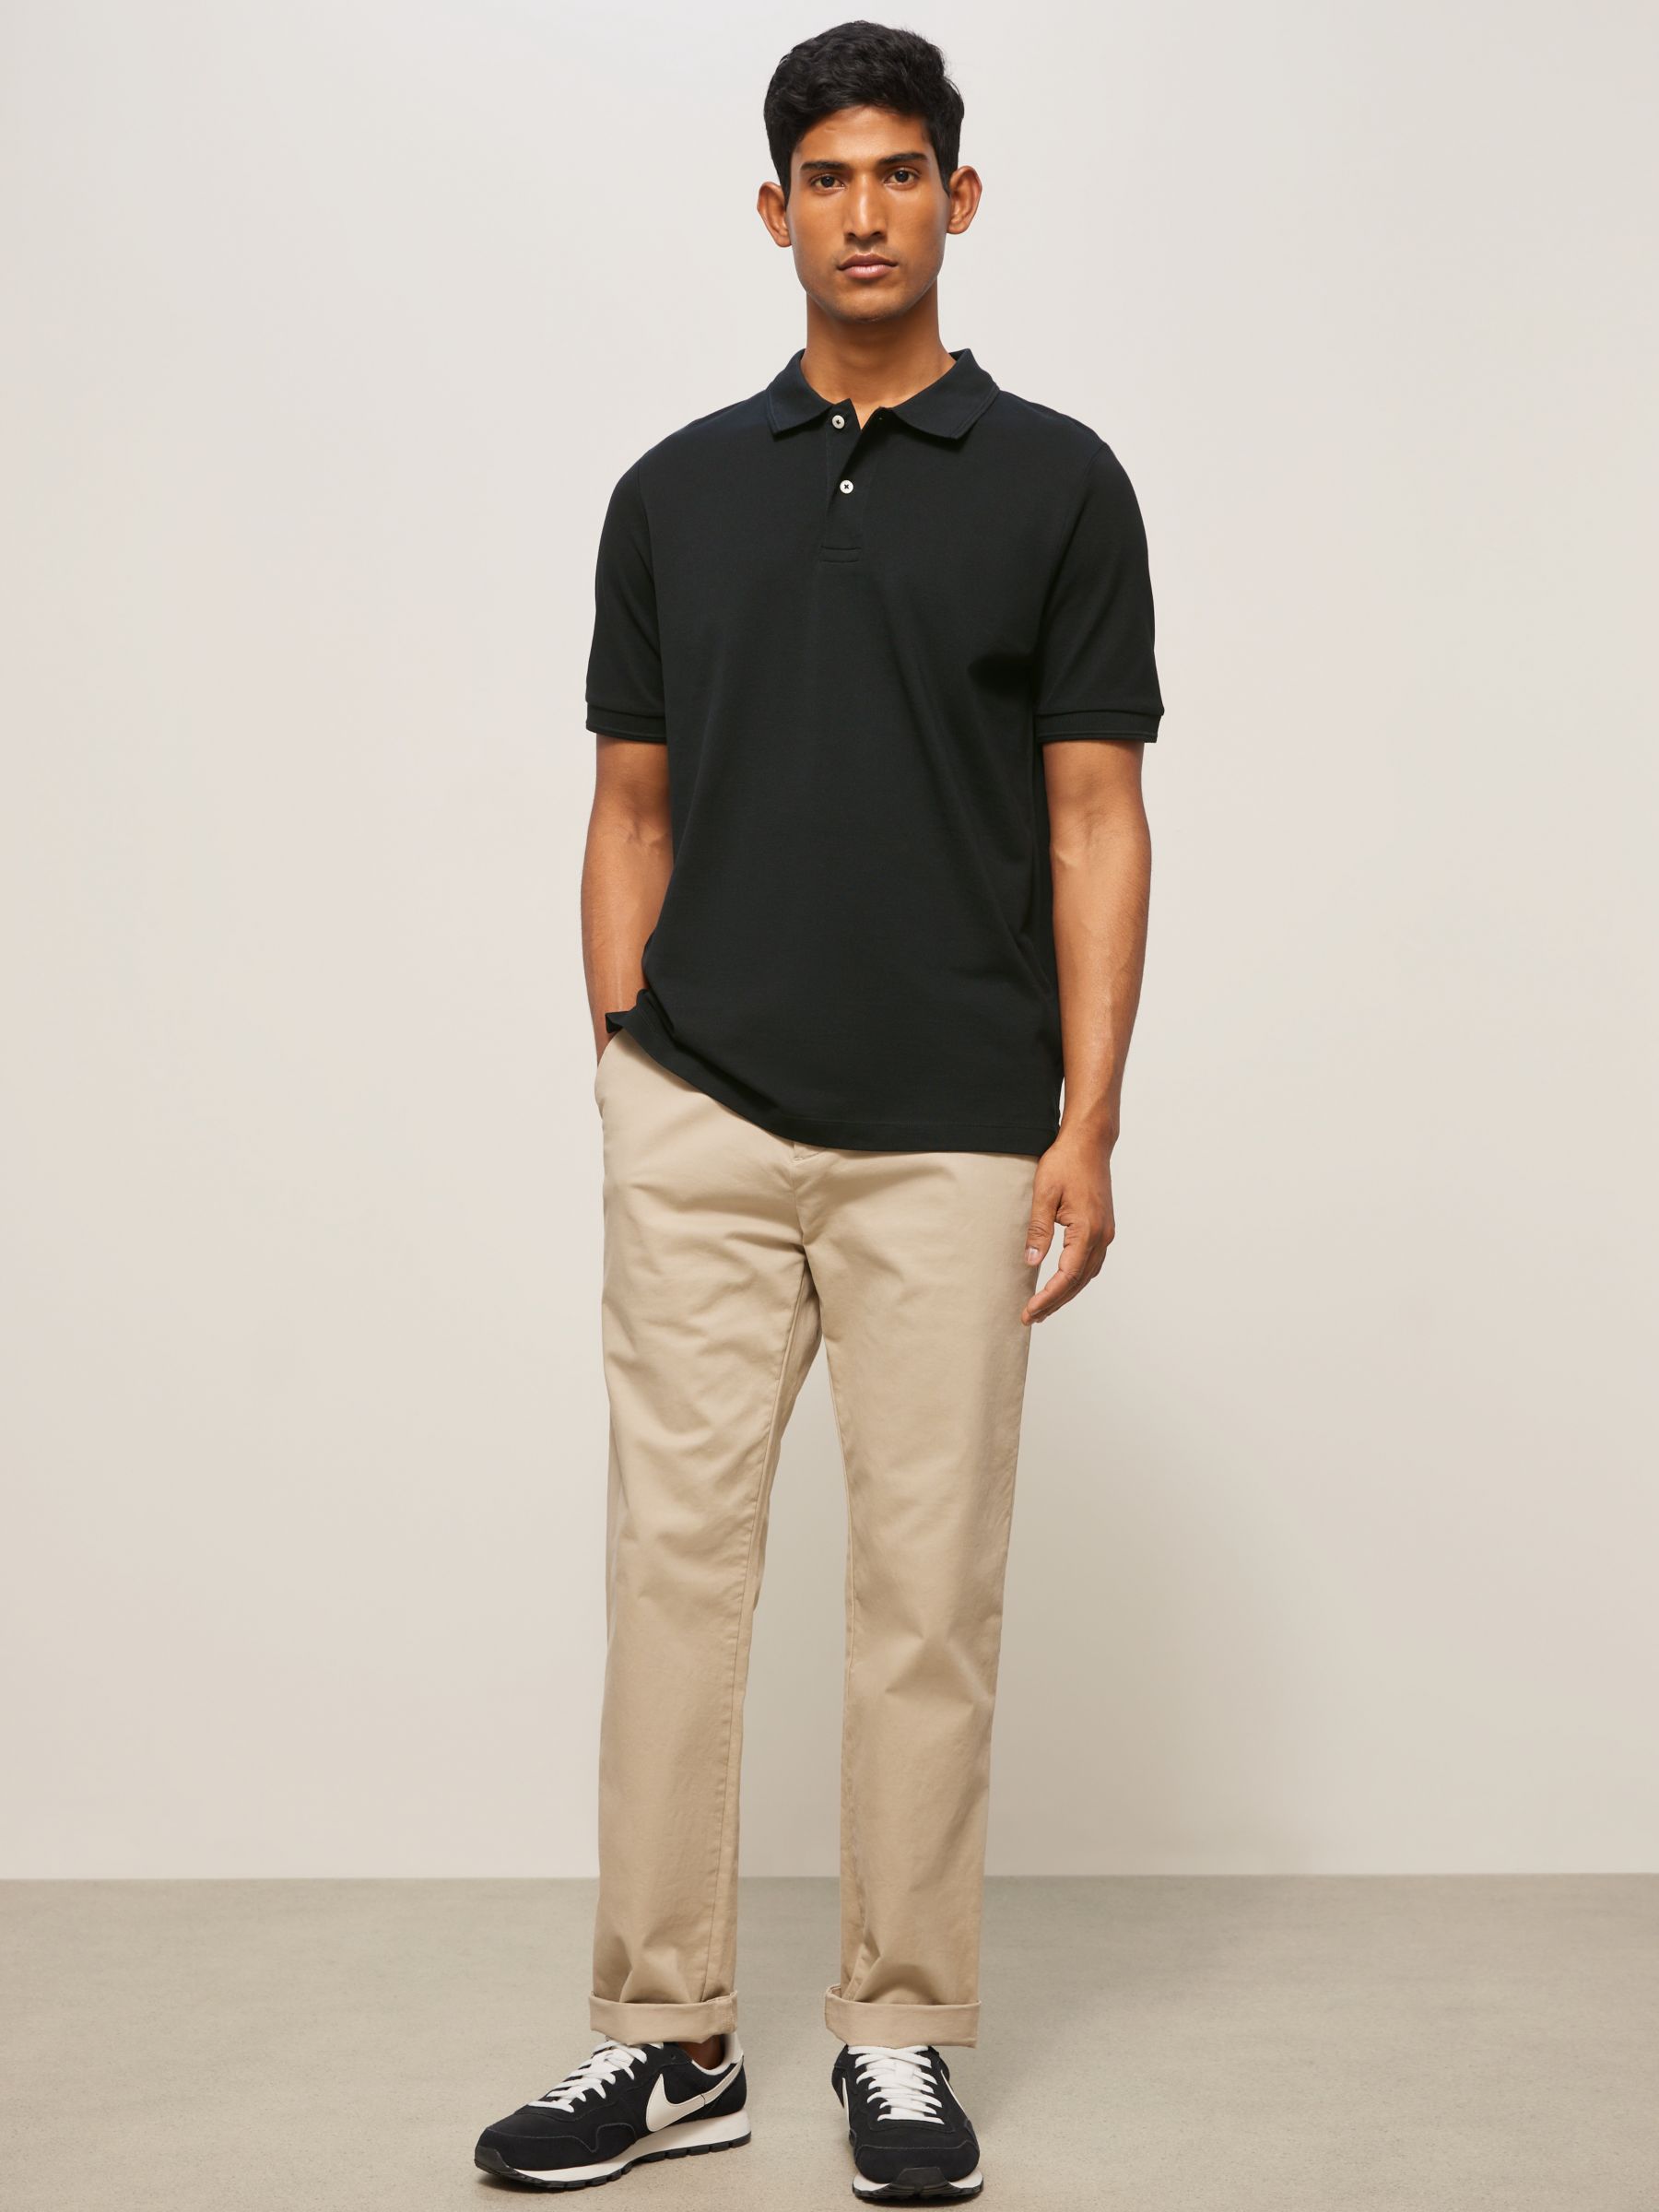 John Lewis Supima Cotton Jersey Polo Shirt, Black at John Lewis & Partners